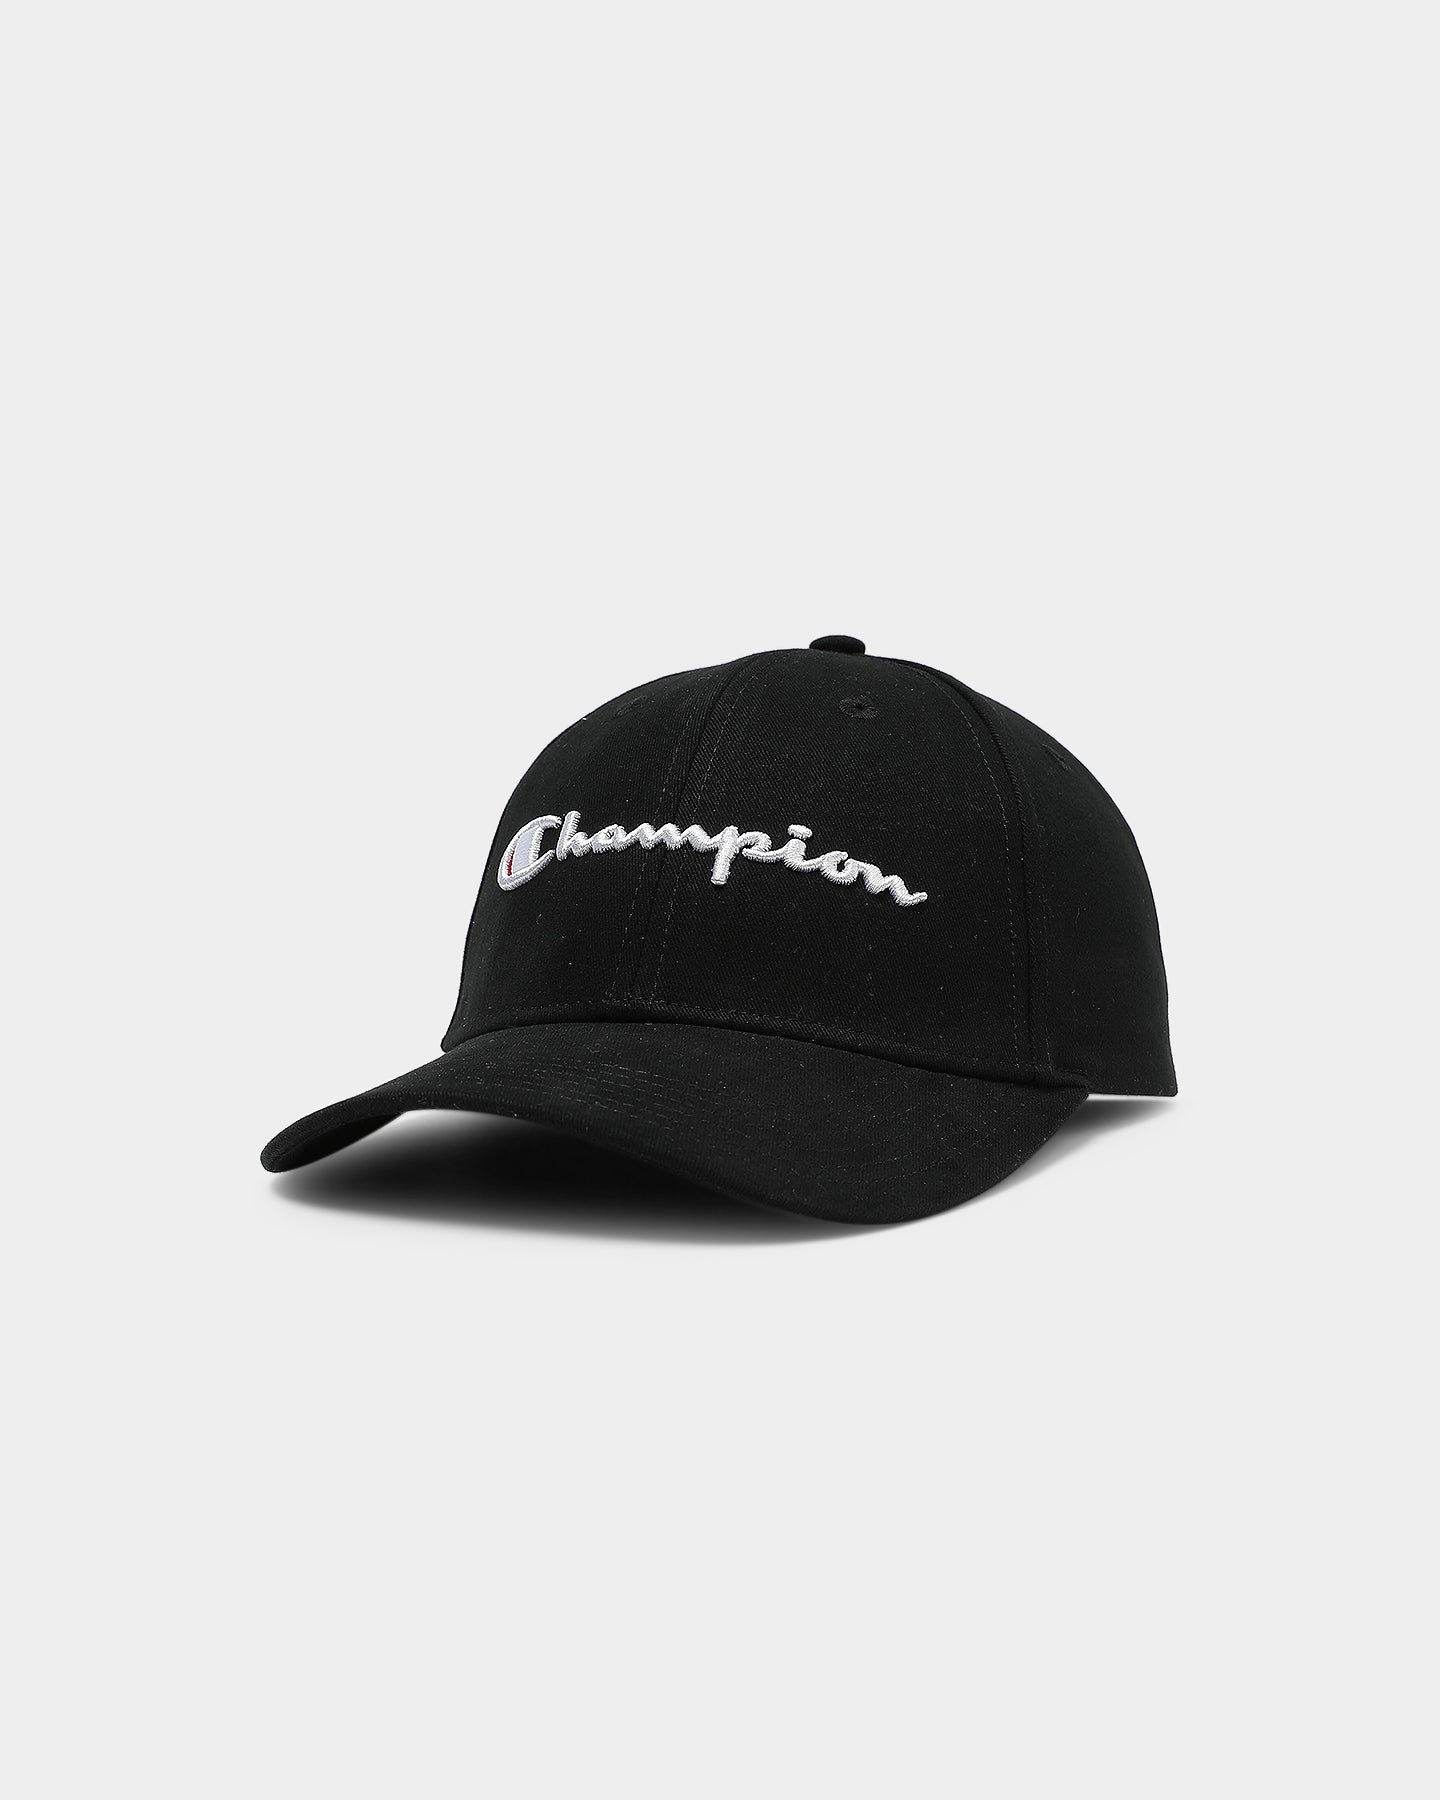 champion hat black